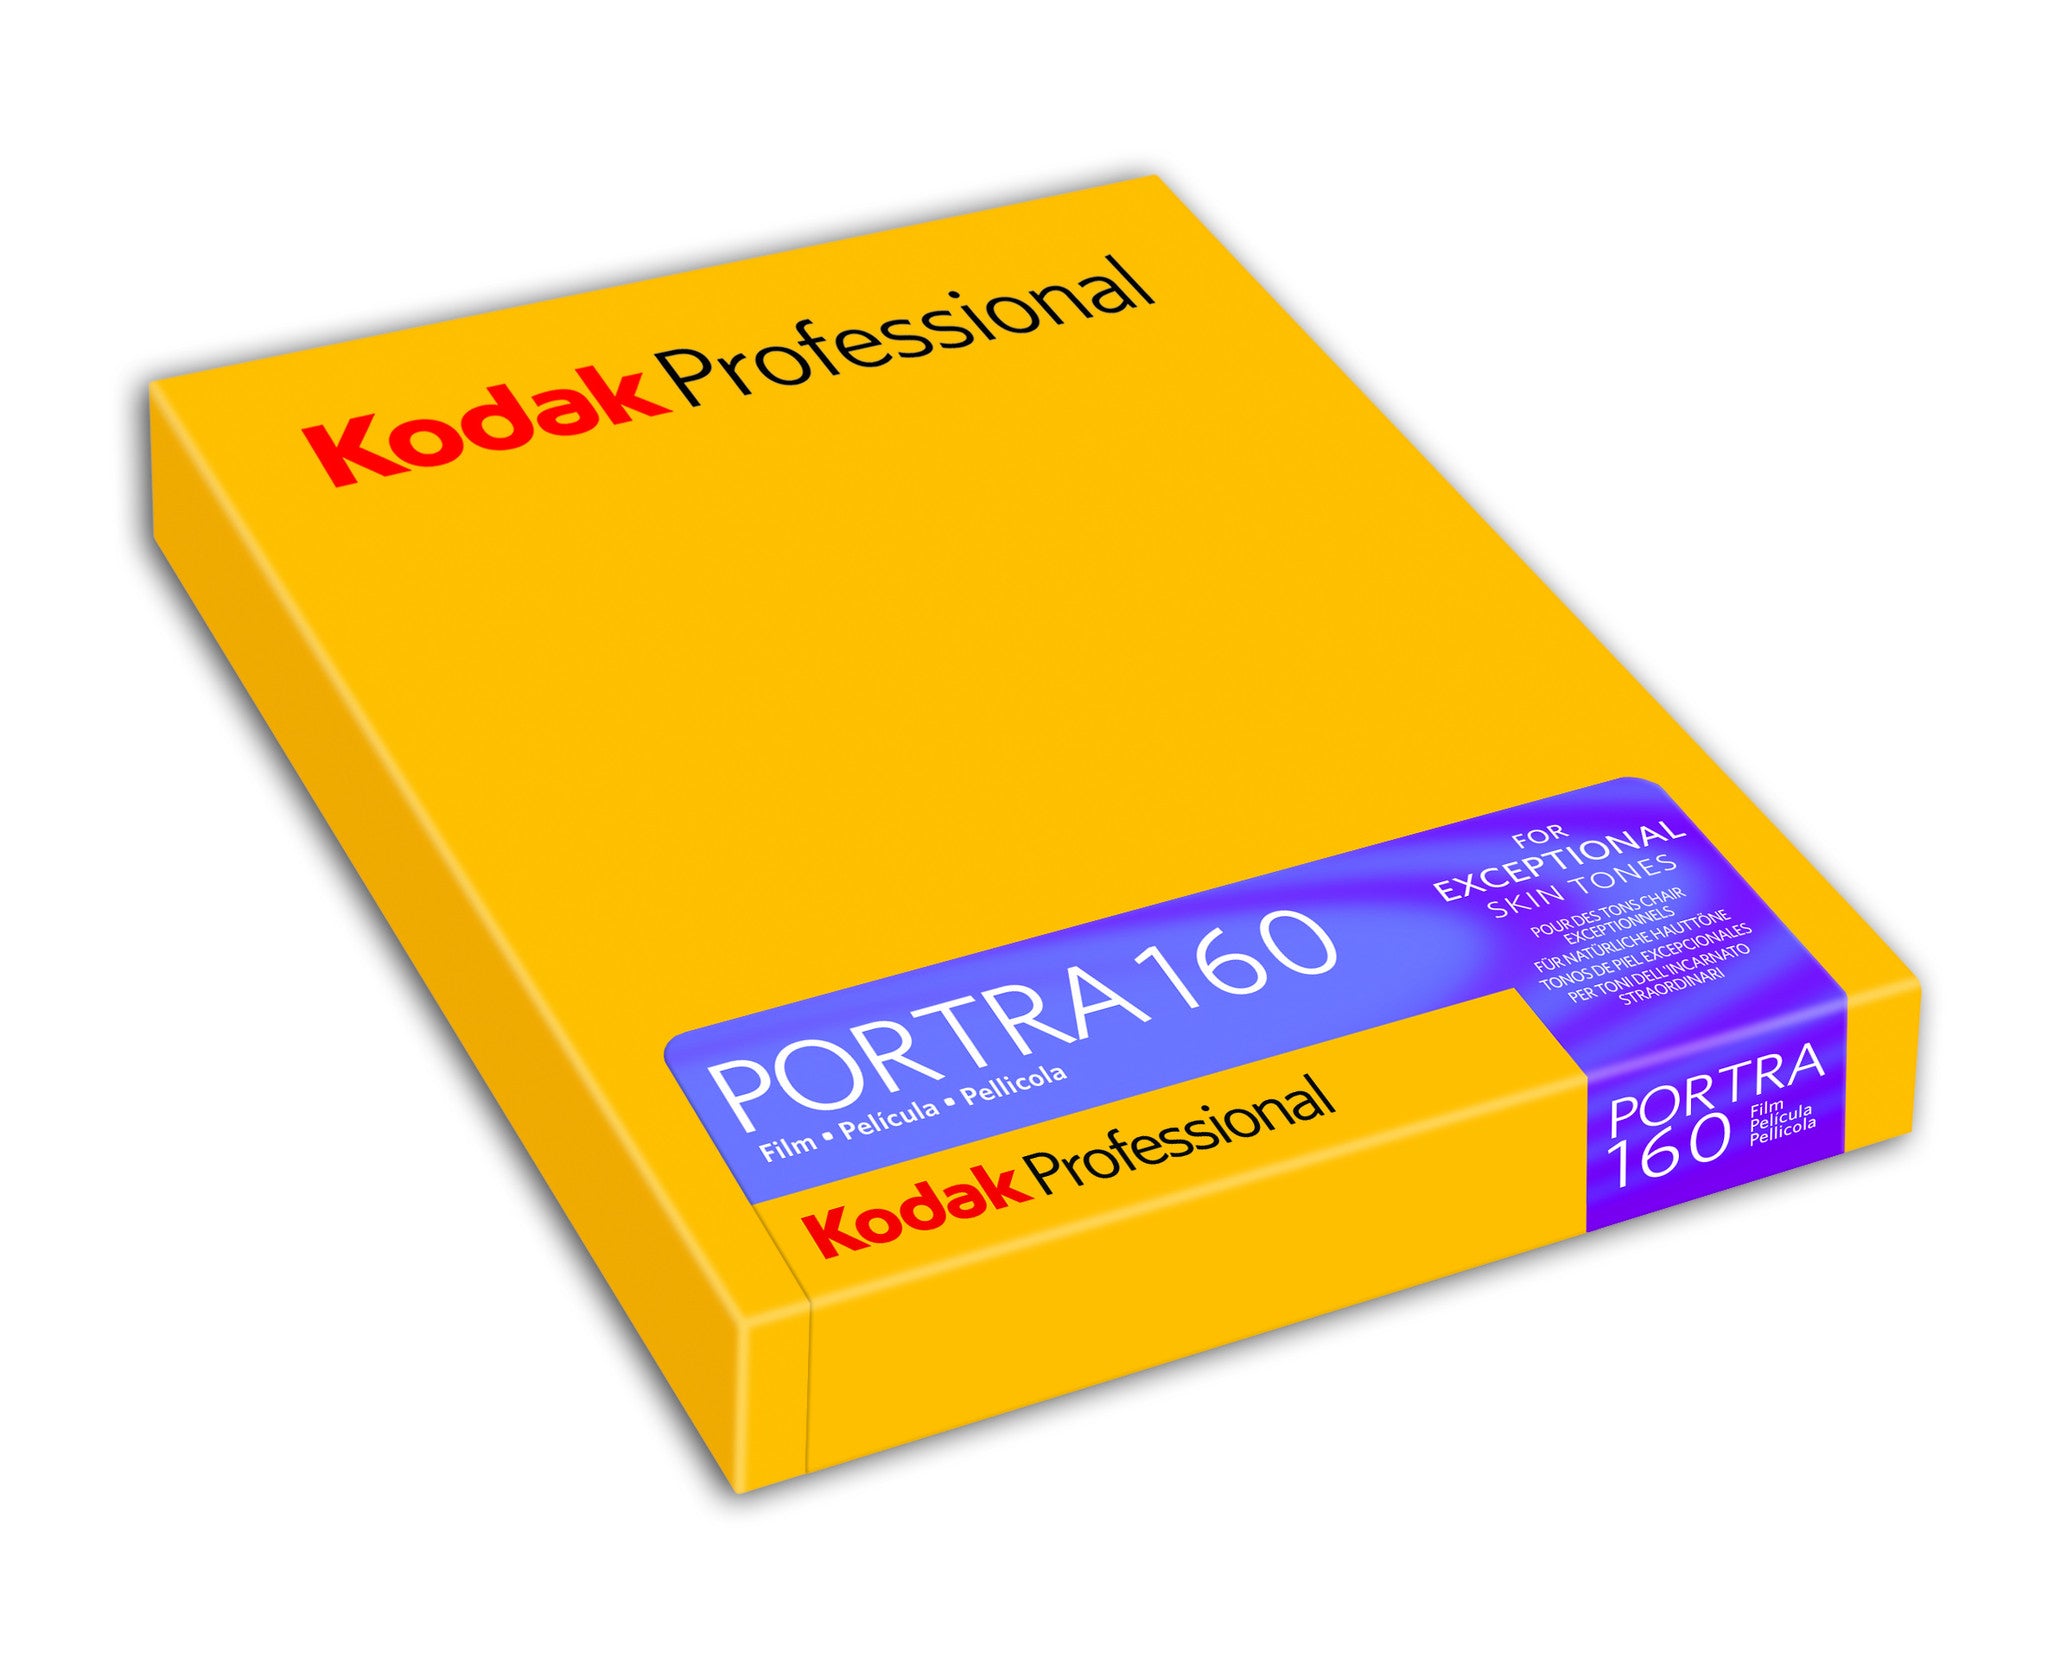 Kodak Portra 160 4x5 Film (10 Sheets), camera film, Kodak - Pictureline  - 1